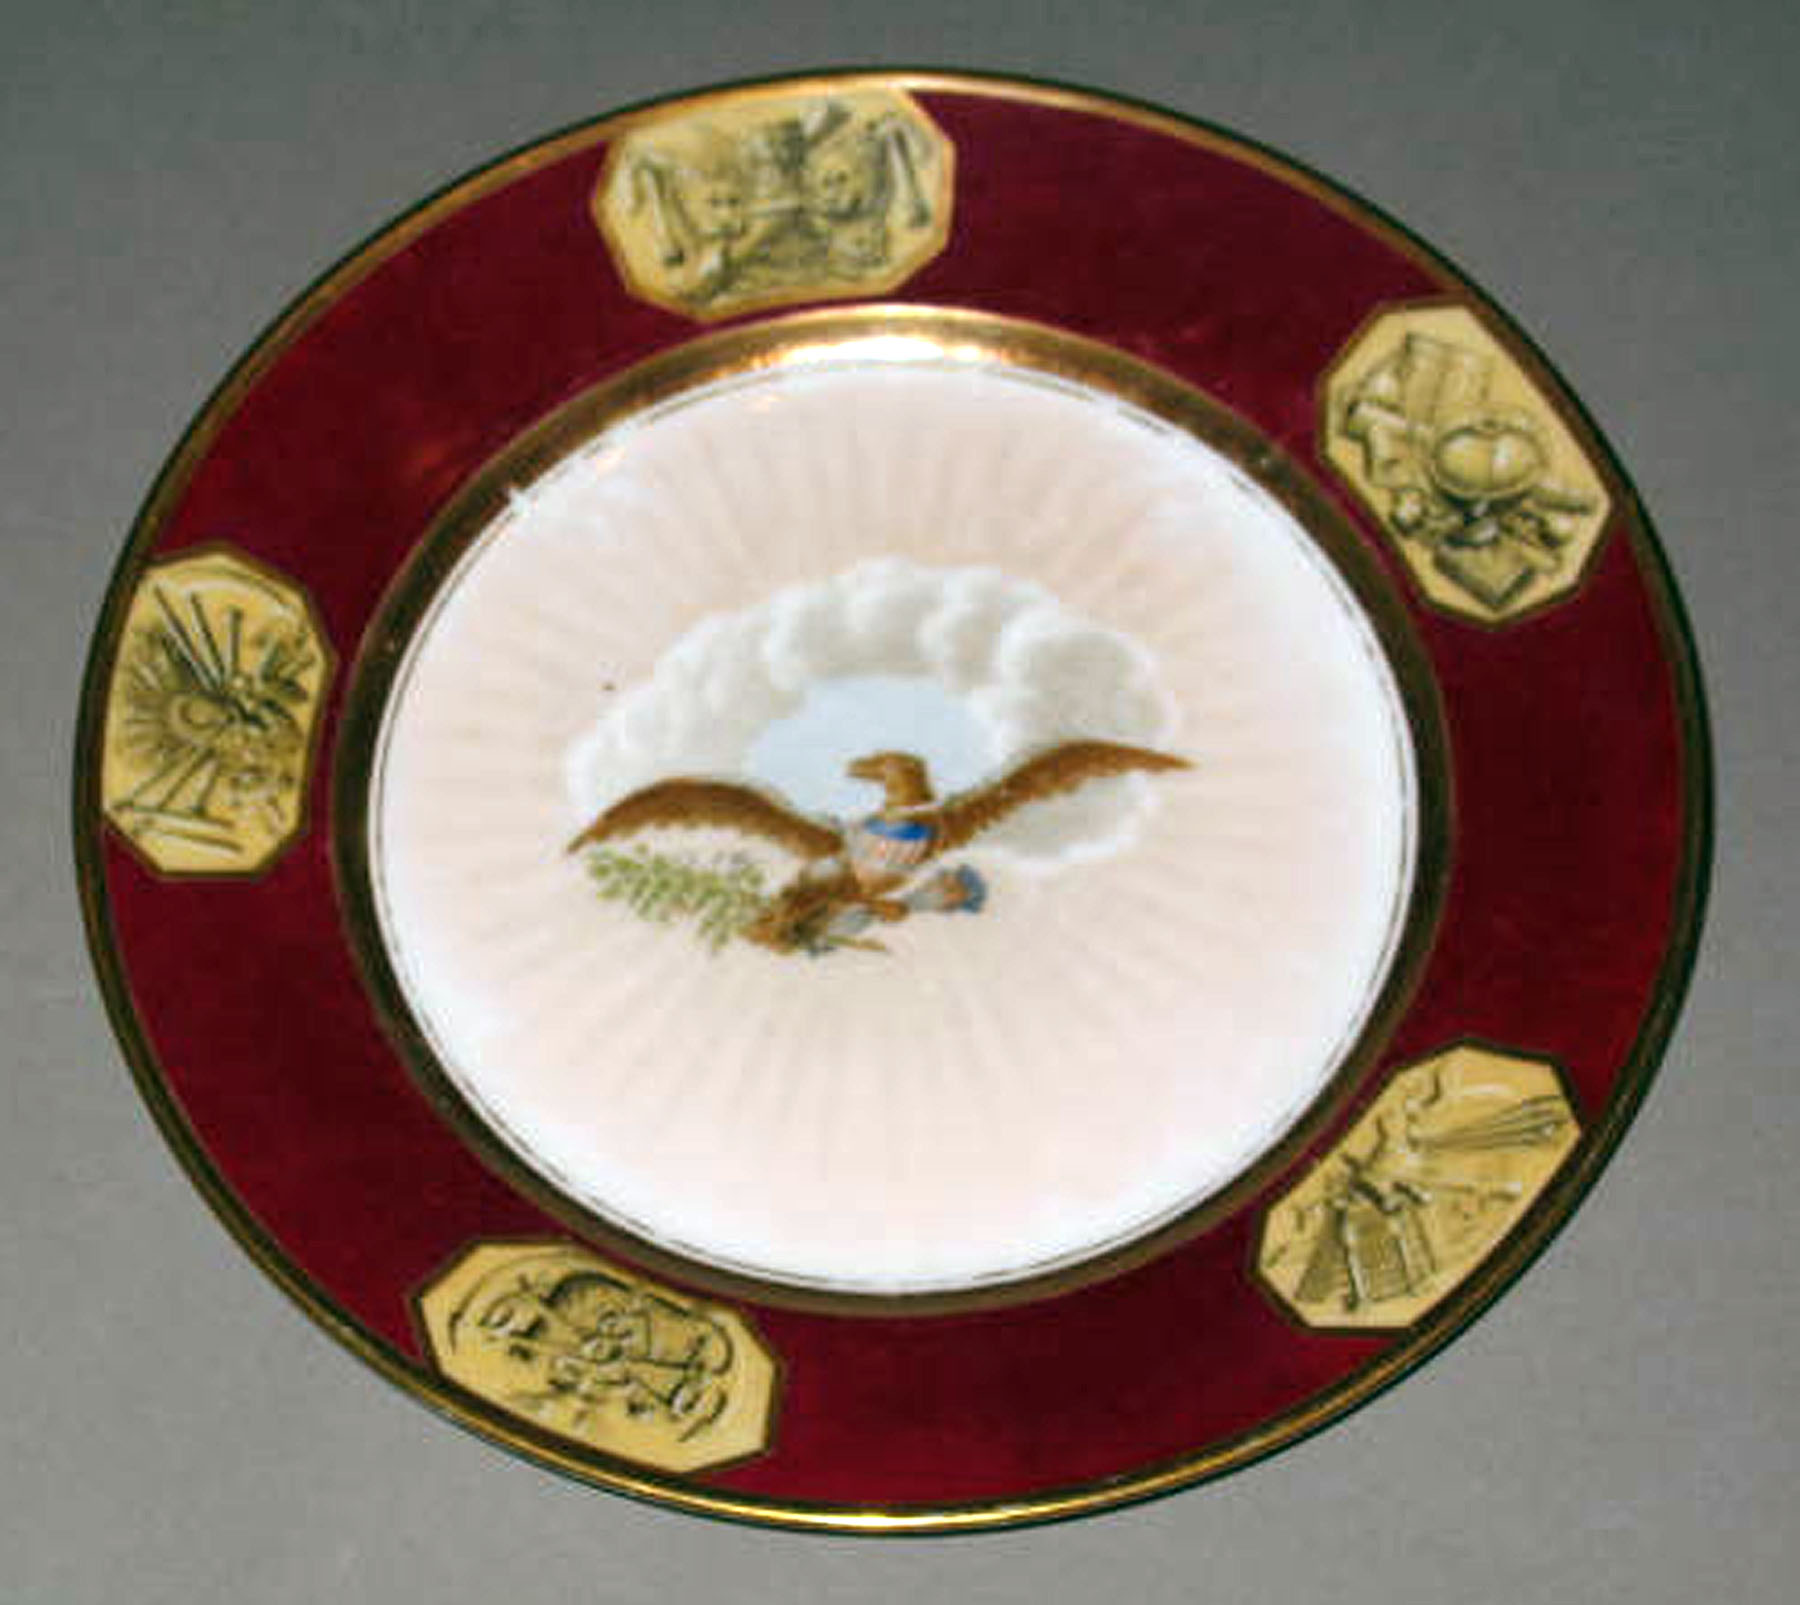 1958.1606.008 Porcelain plate